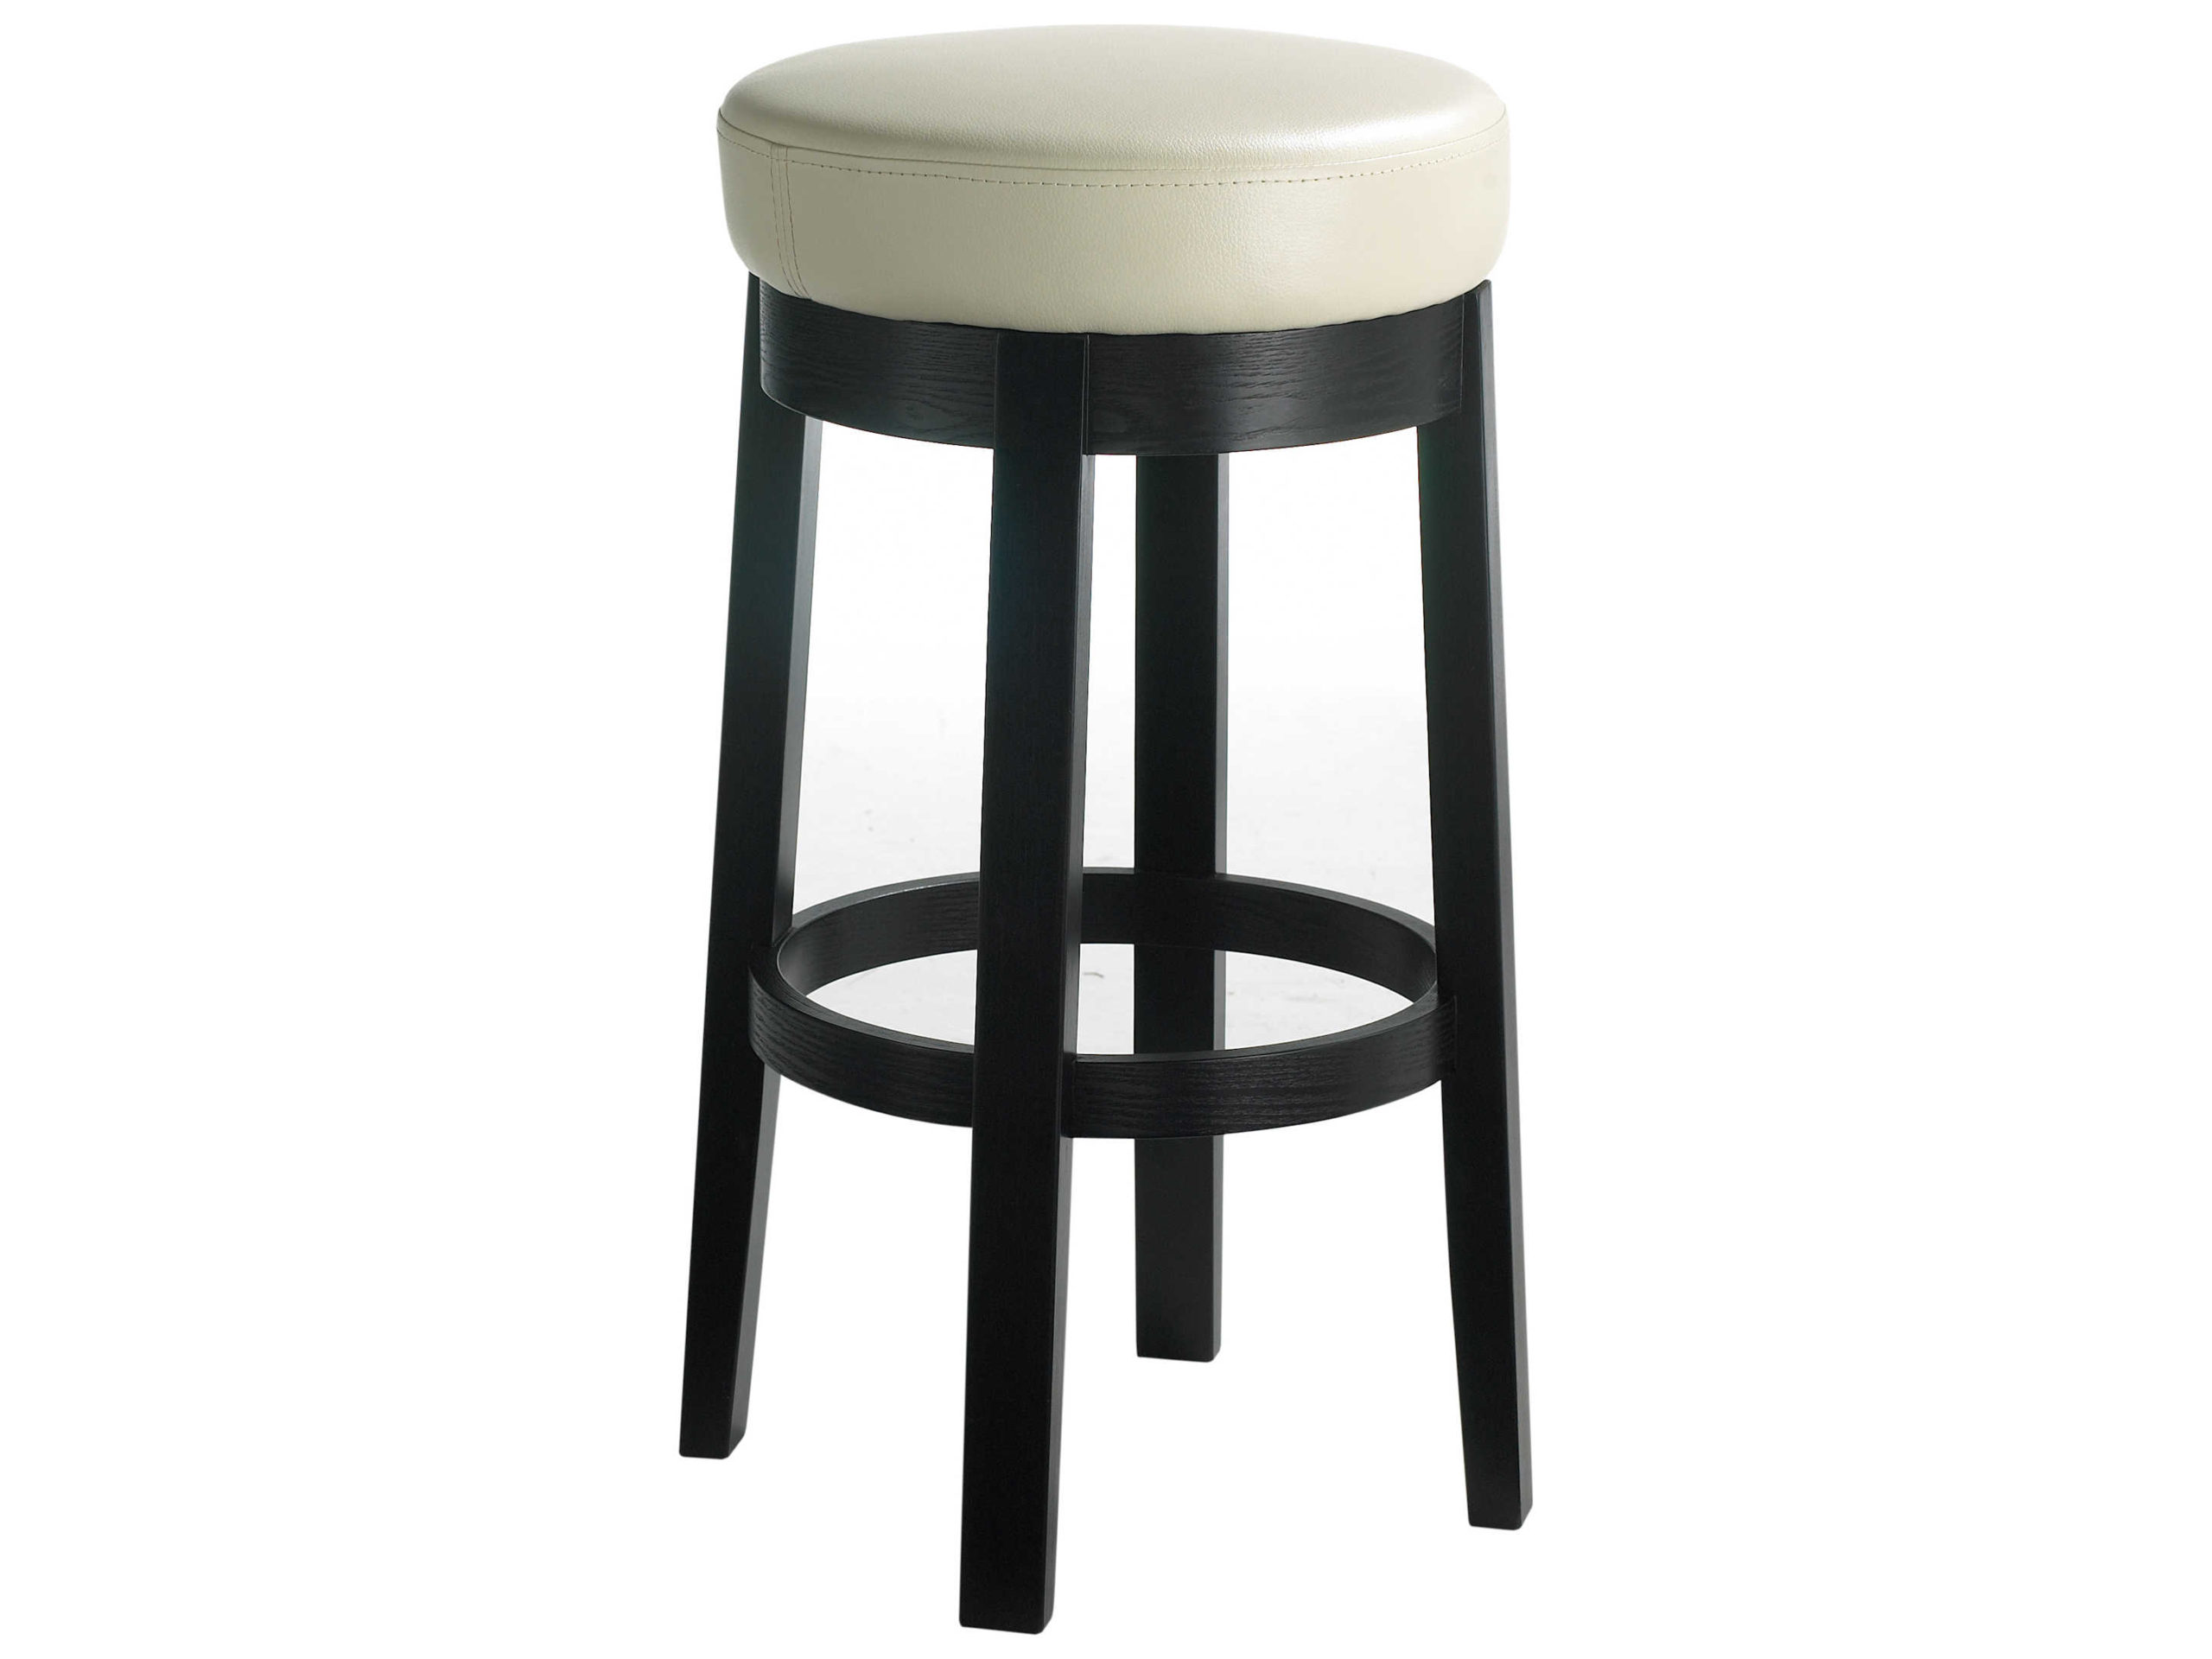 Cream wooden bar stools